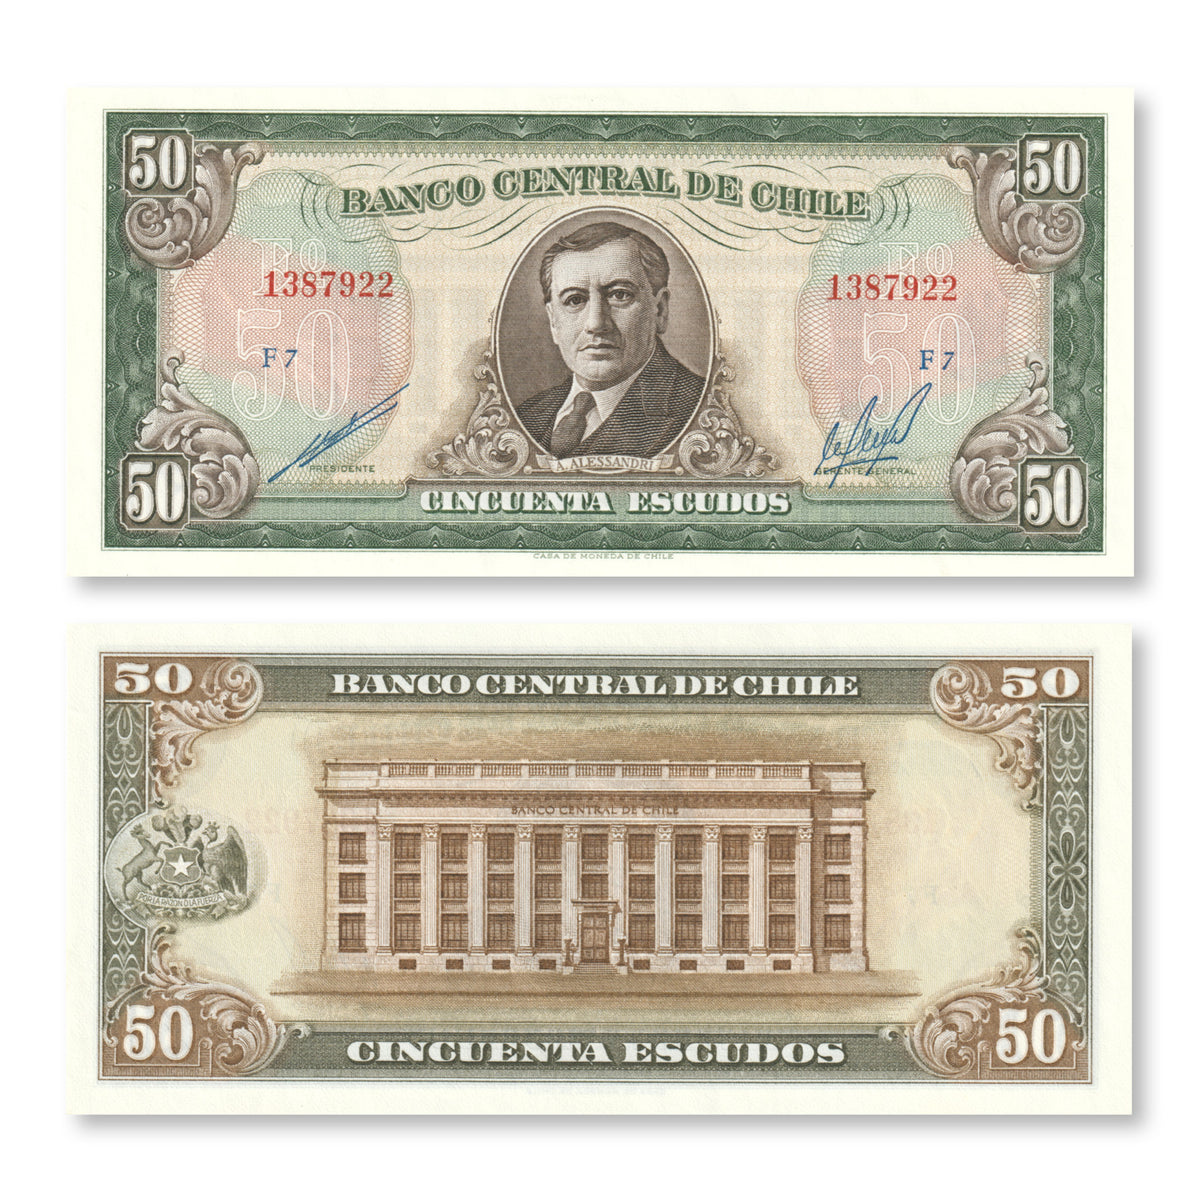 Chile 50 Escudos, 1973, B275e, P140b, UNC - Robert's World Money - World Banknotes